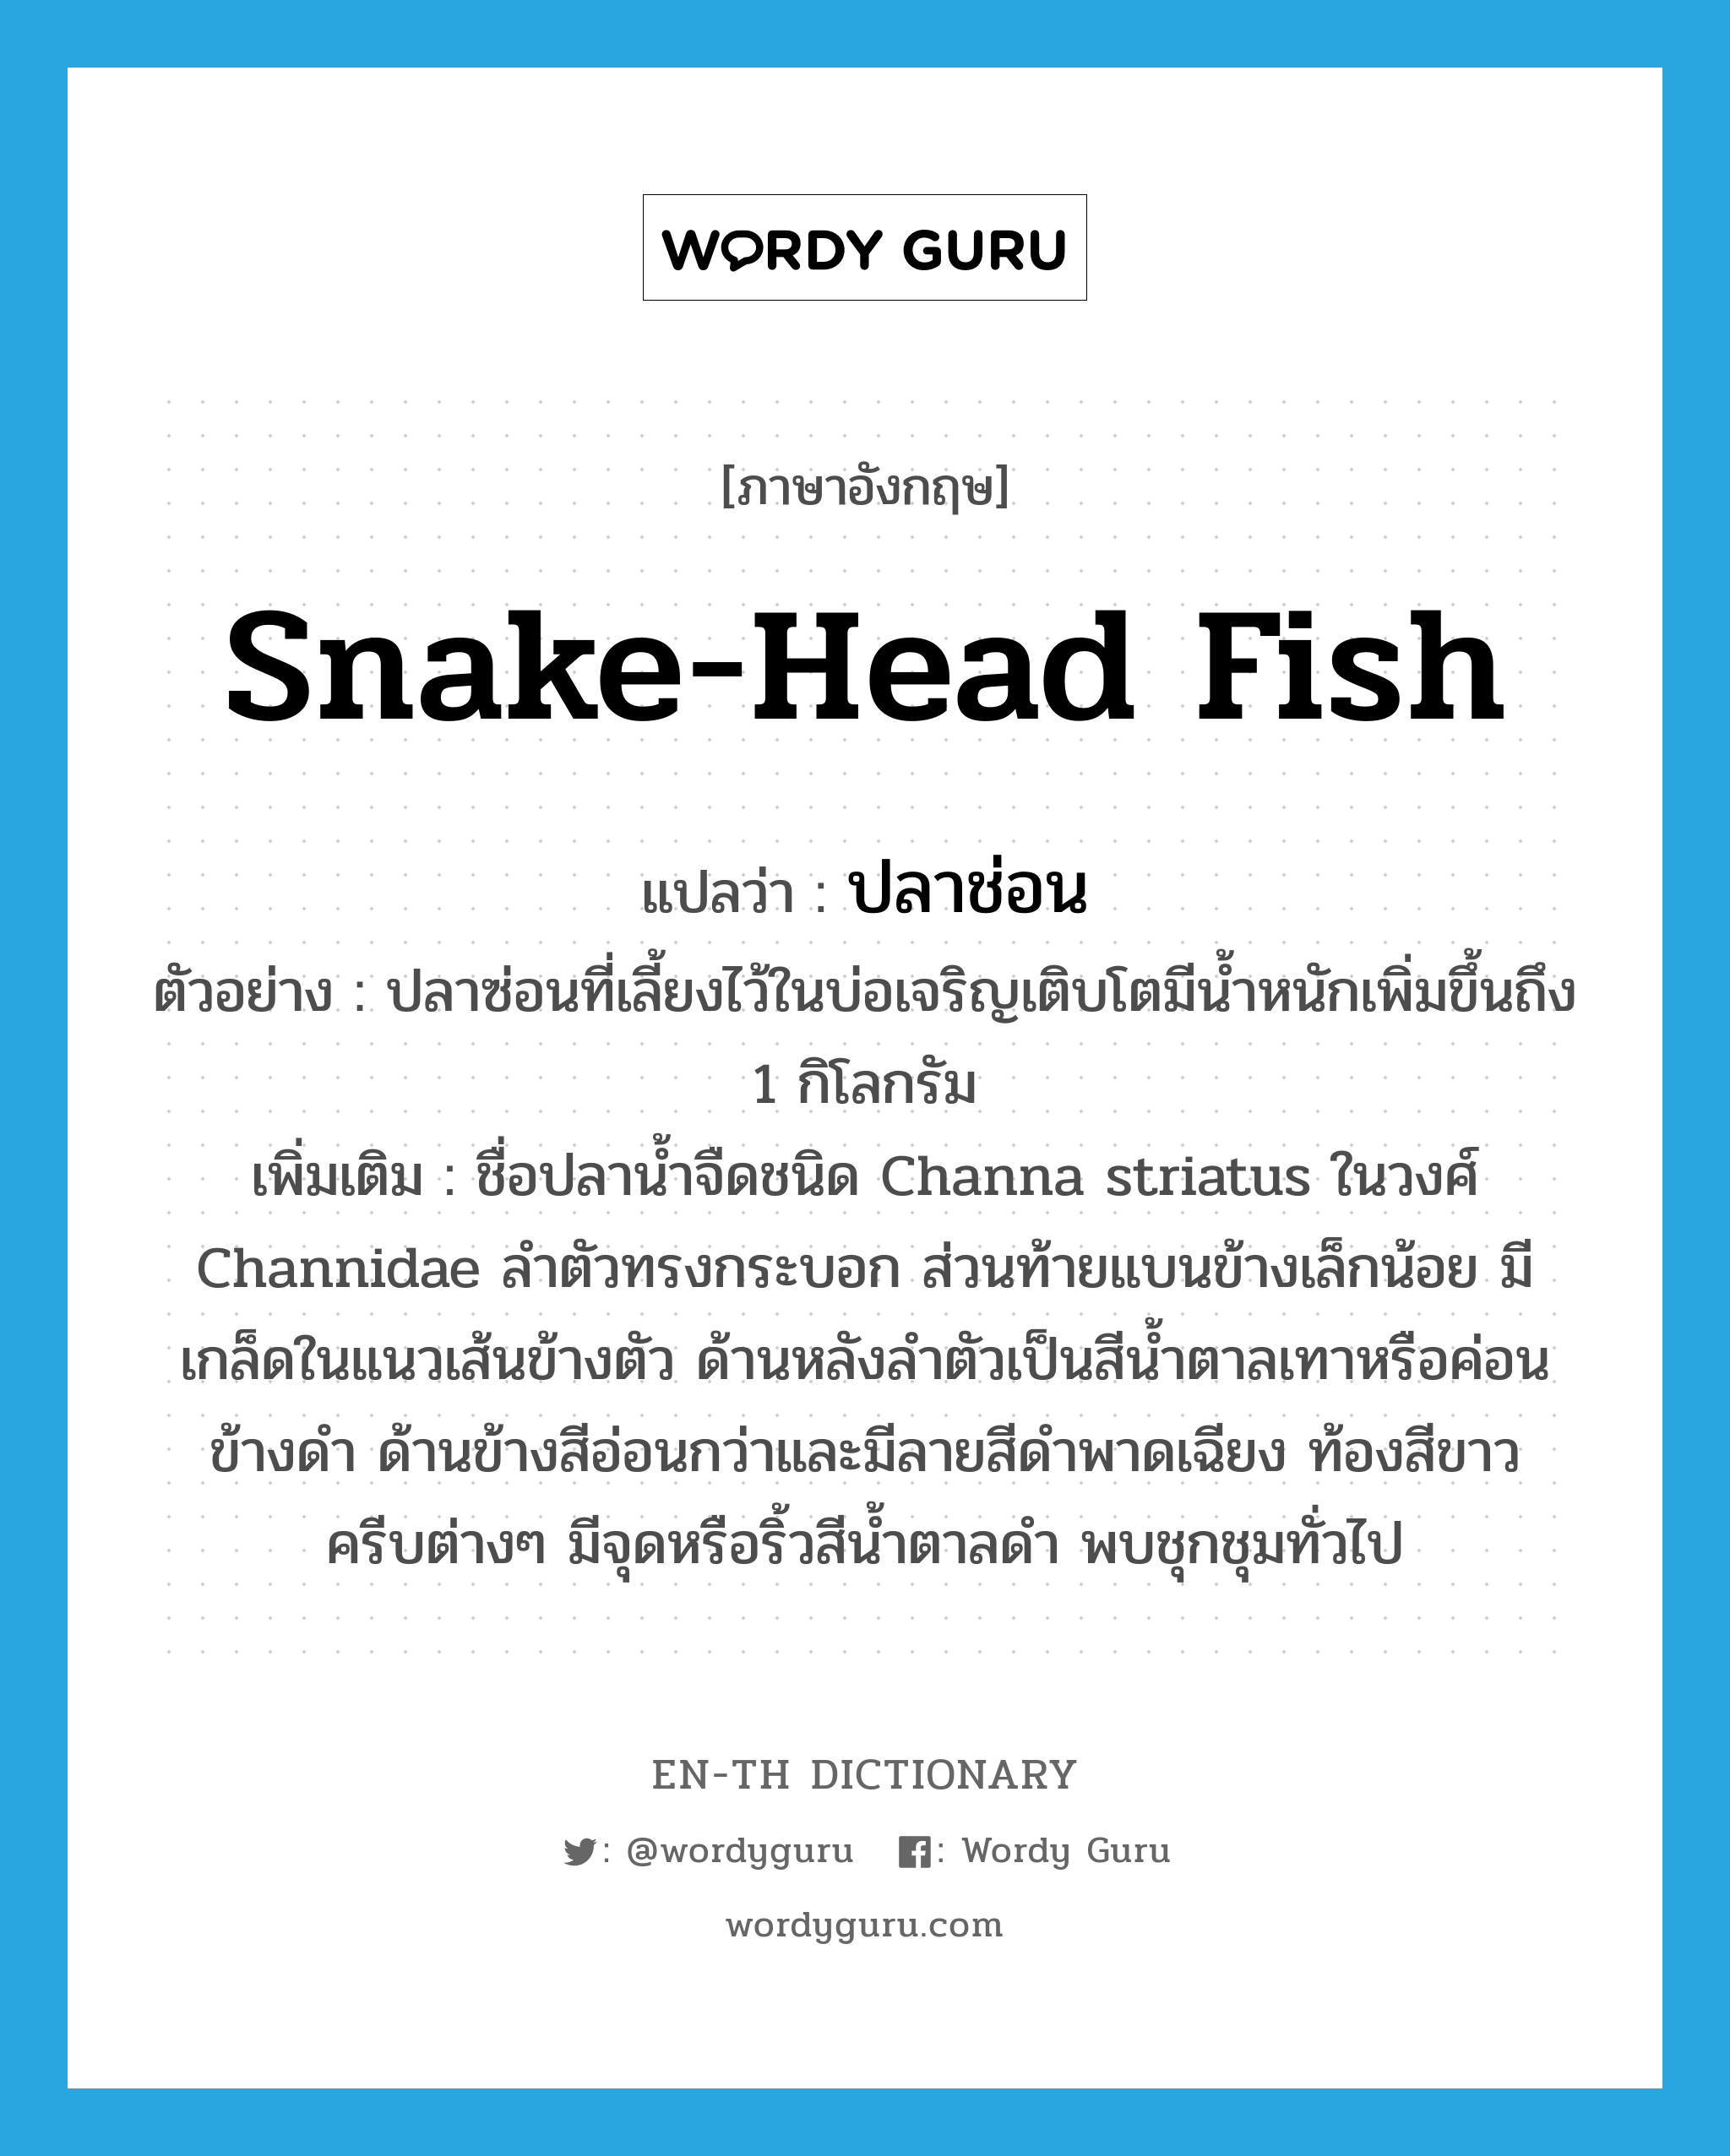 snake-head fish แปลว่า?, คำศัพท์ภาษาอังกฤษ snake-head fish แปลว่า ปลาช่อน ประเภท N ตัวอย่าง ปลาซ่อนที่เลี้ยงไว้ในบ่อเจริญเติบโตมีน้ำหนักเพิ่มขึ้นถึง 1 กิโลกรัม เพิ่มเติม ชื่อปลาน้ำจืดชนิด Channa striatus ในวงศ์ Channidae ลำตัวทรงกระบอก ส่วนท้ายแบนข้างเล็กน้อย มีเกล็ดในแนวเส้นข้างตัว ด้านหลังลำตัวเป็นสีน้ำตาลเทาหรือค่อนข้างดำ ด้านข้างสีอ่อนกว่าและมีลายสีดำพาดเฉียง ท้องสีขาว ครีบต่างๆ มีจุดหรือริ้วสีน้ำตาลดำ พบชุกชุมทั่วไป หมวด N